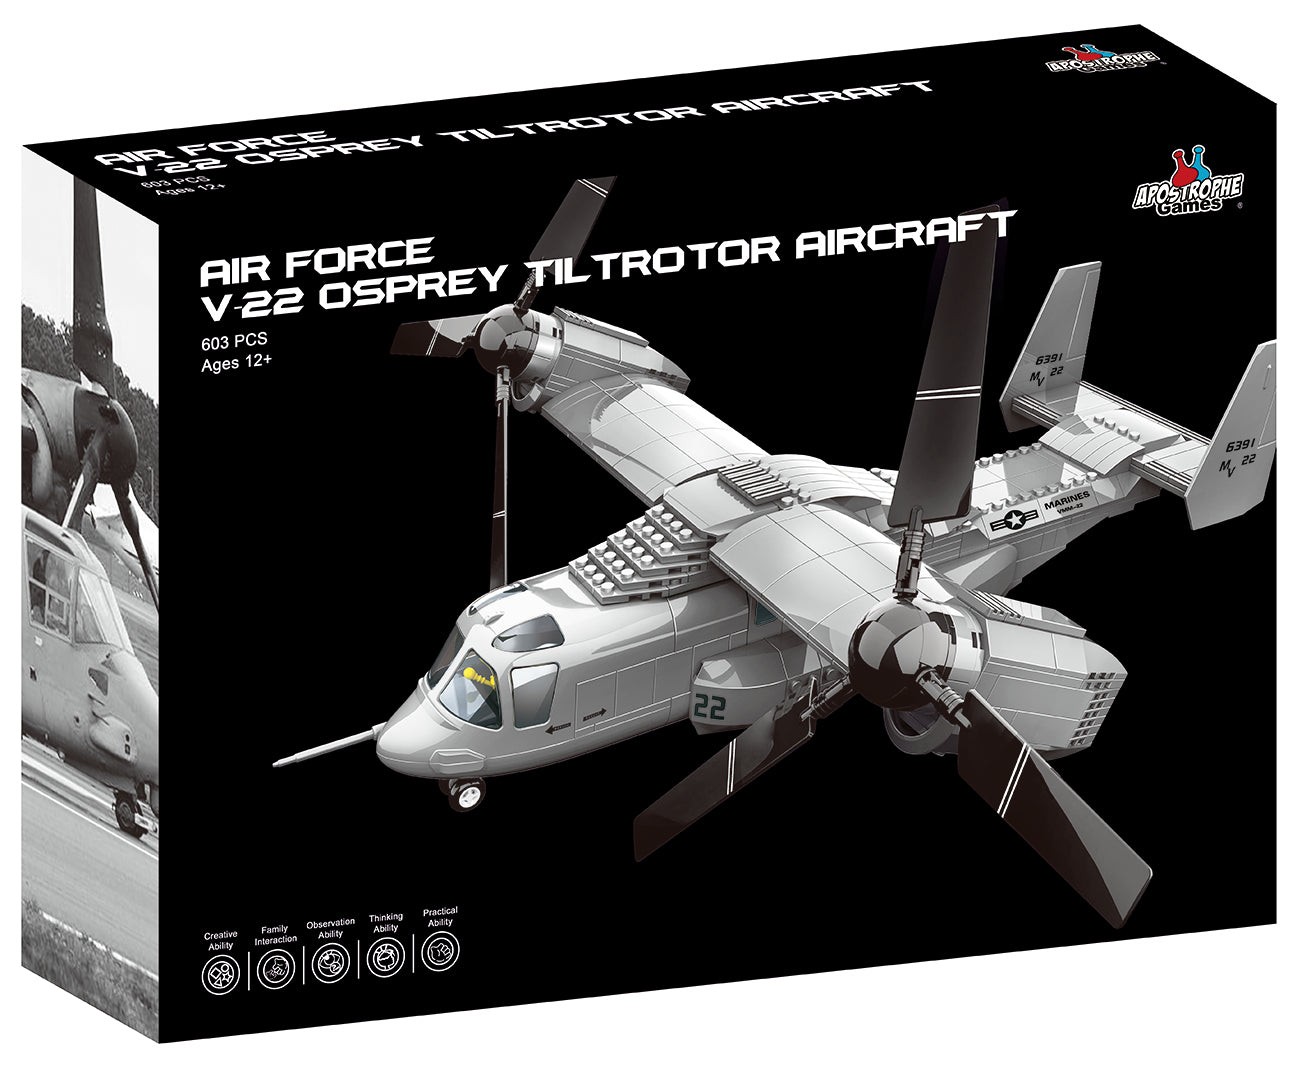 V-22 Osprey Tiltrotor Aircraft Building Block Set - 460 Pieces